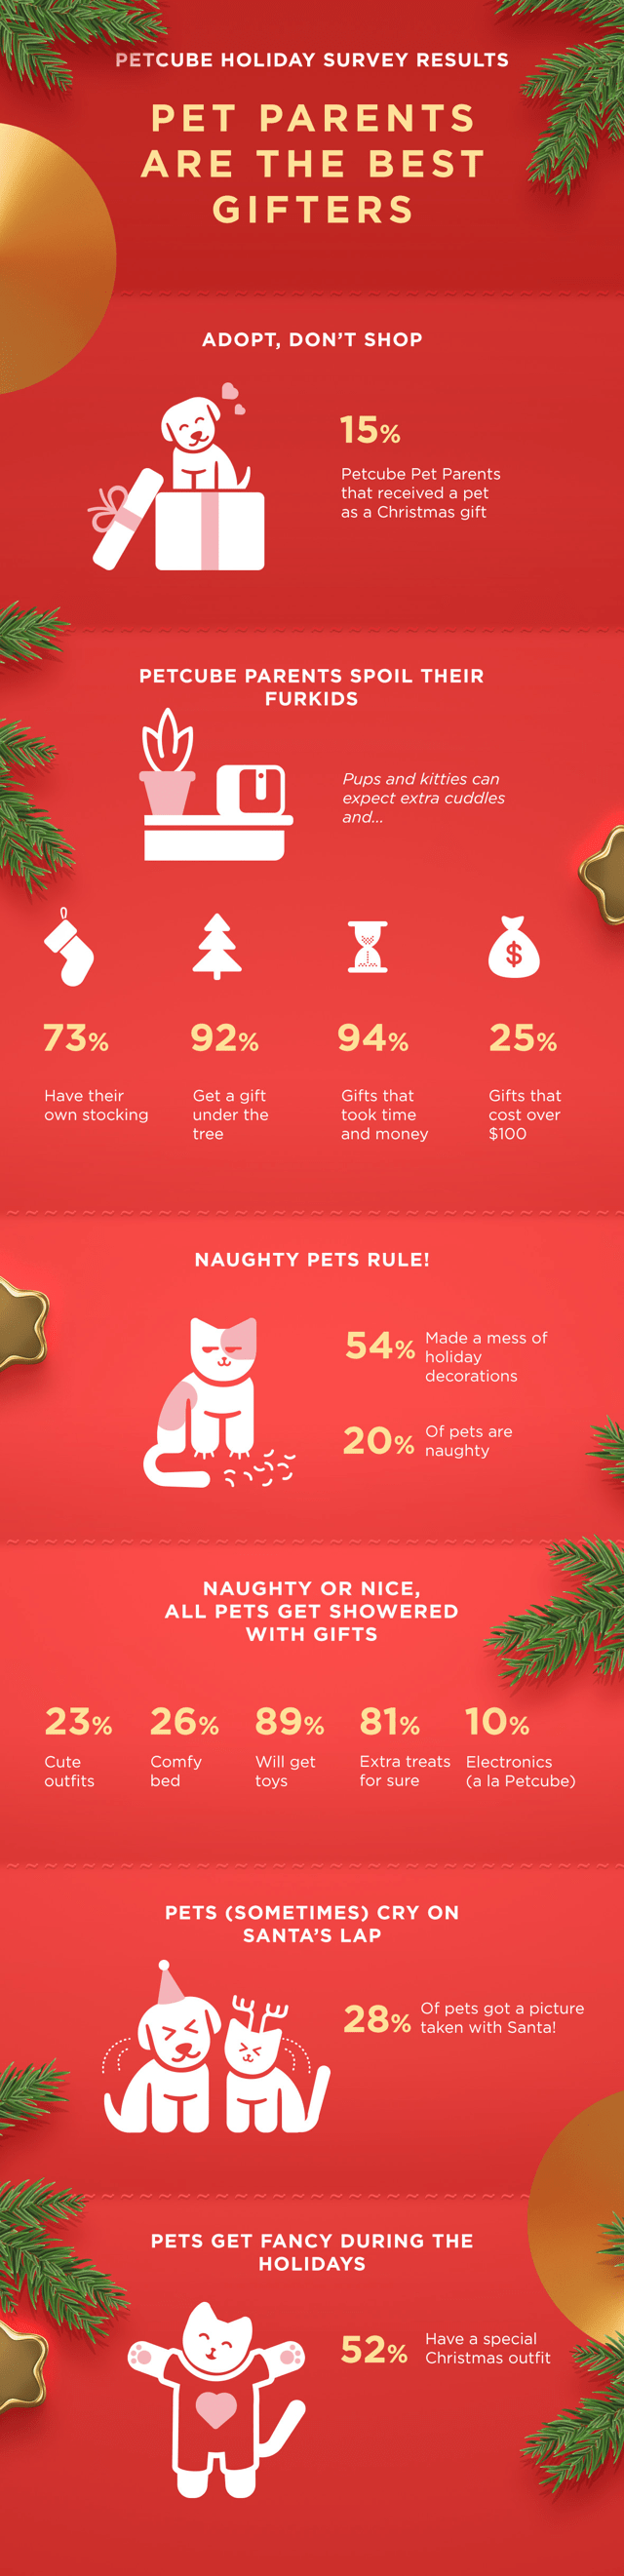 Petcube Pet parent holiday survey infographic